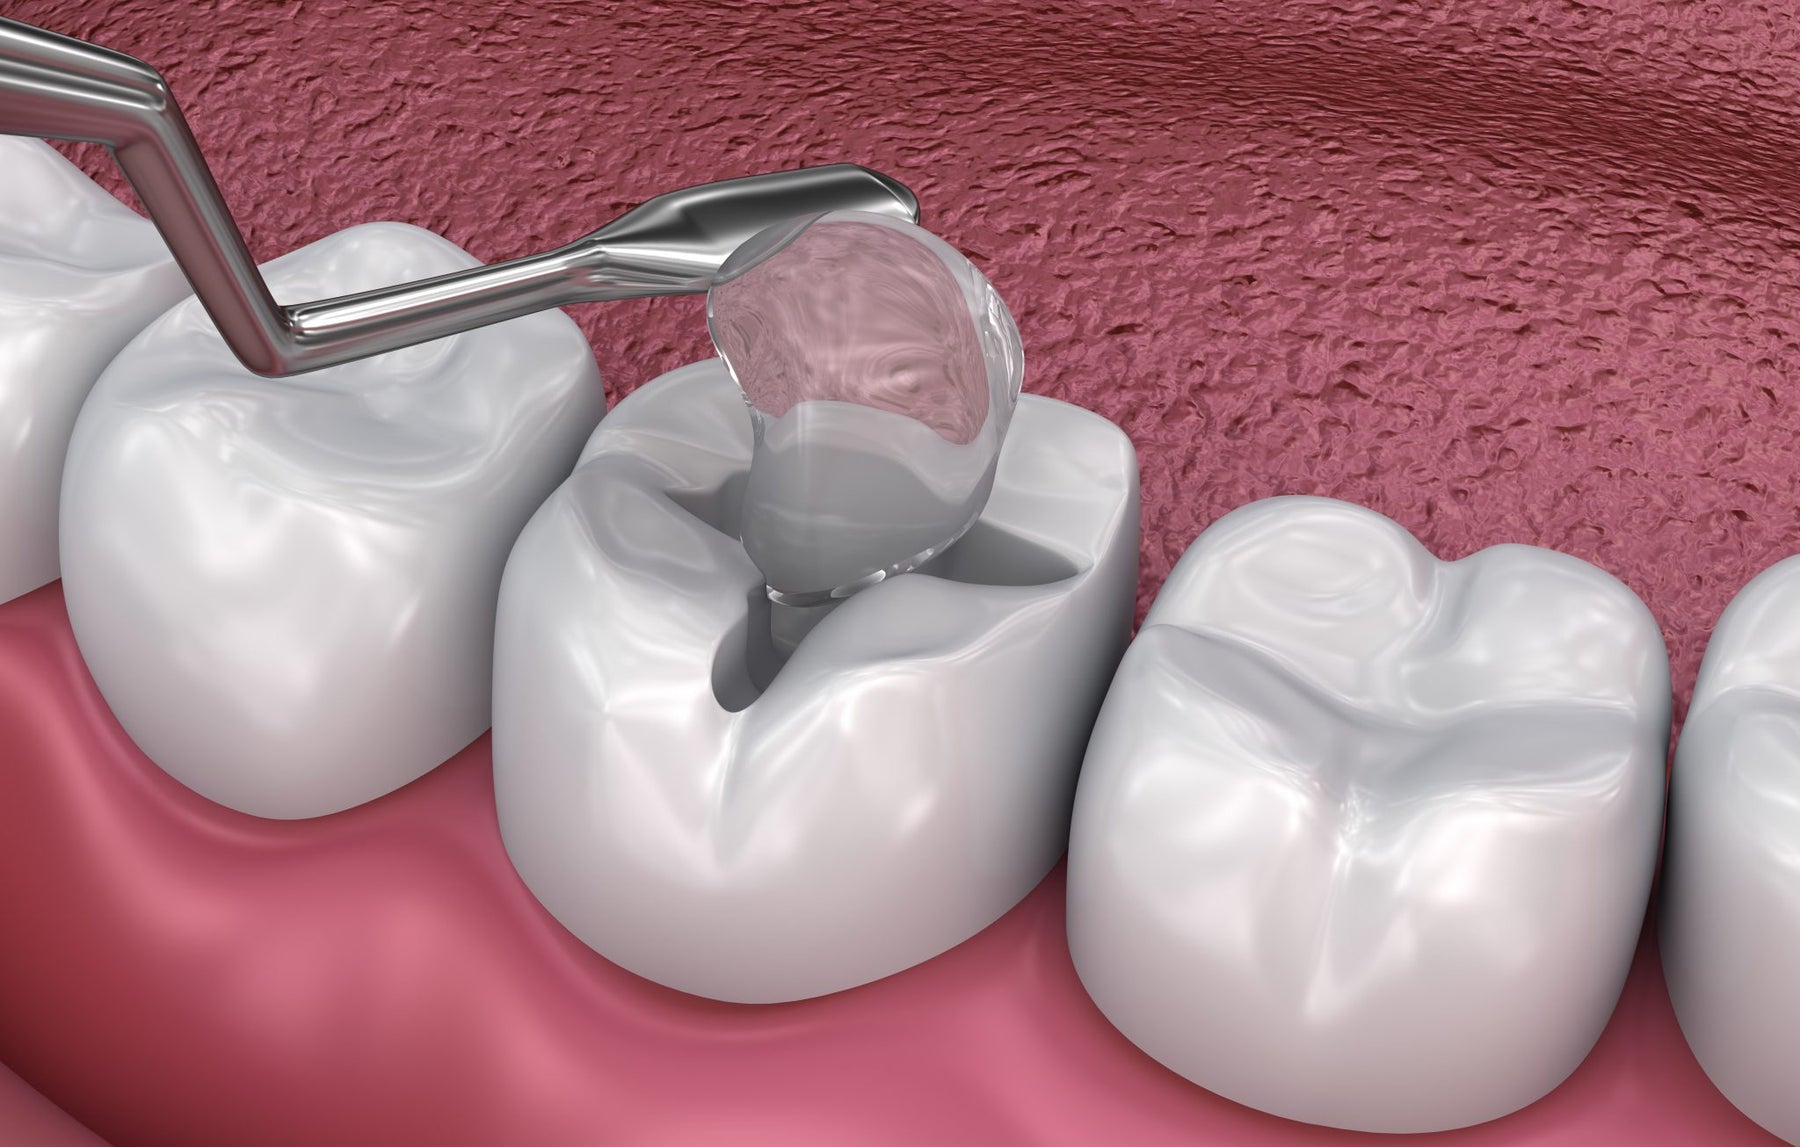 Composite Sculpting: Tools for Esthetic Dental Procedures